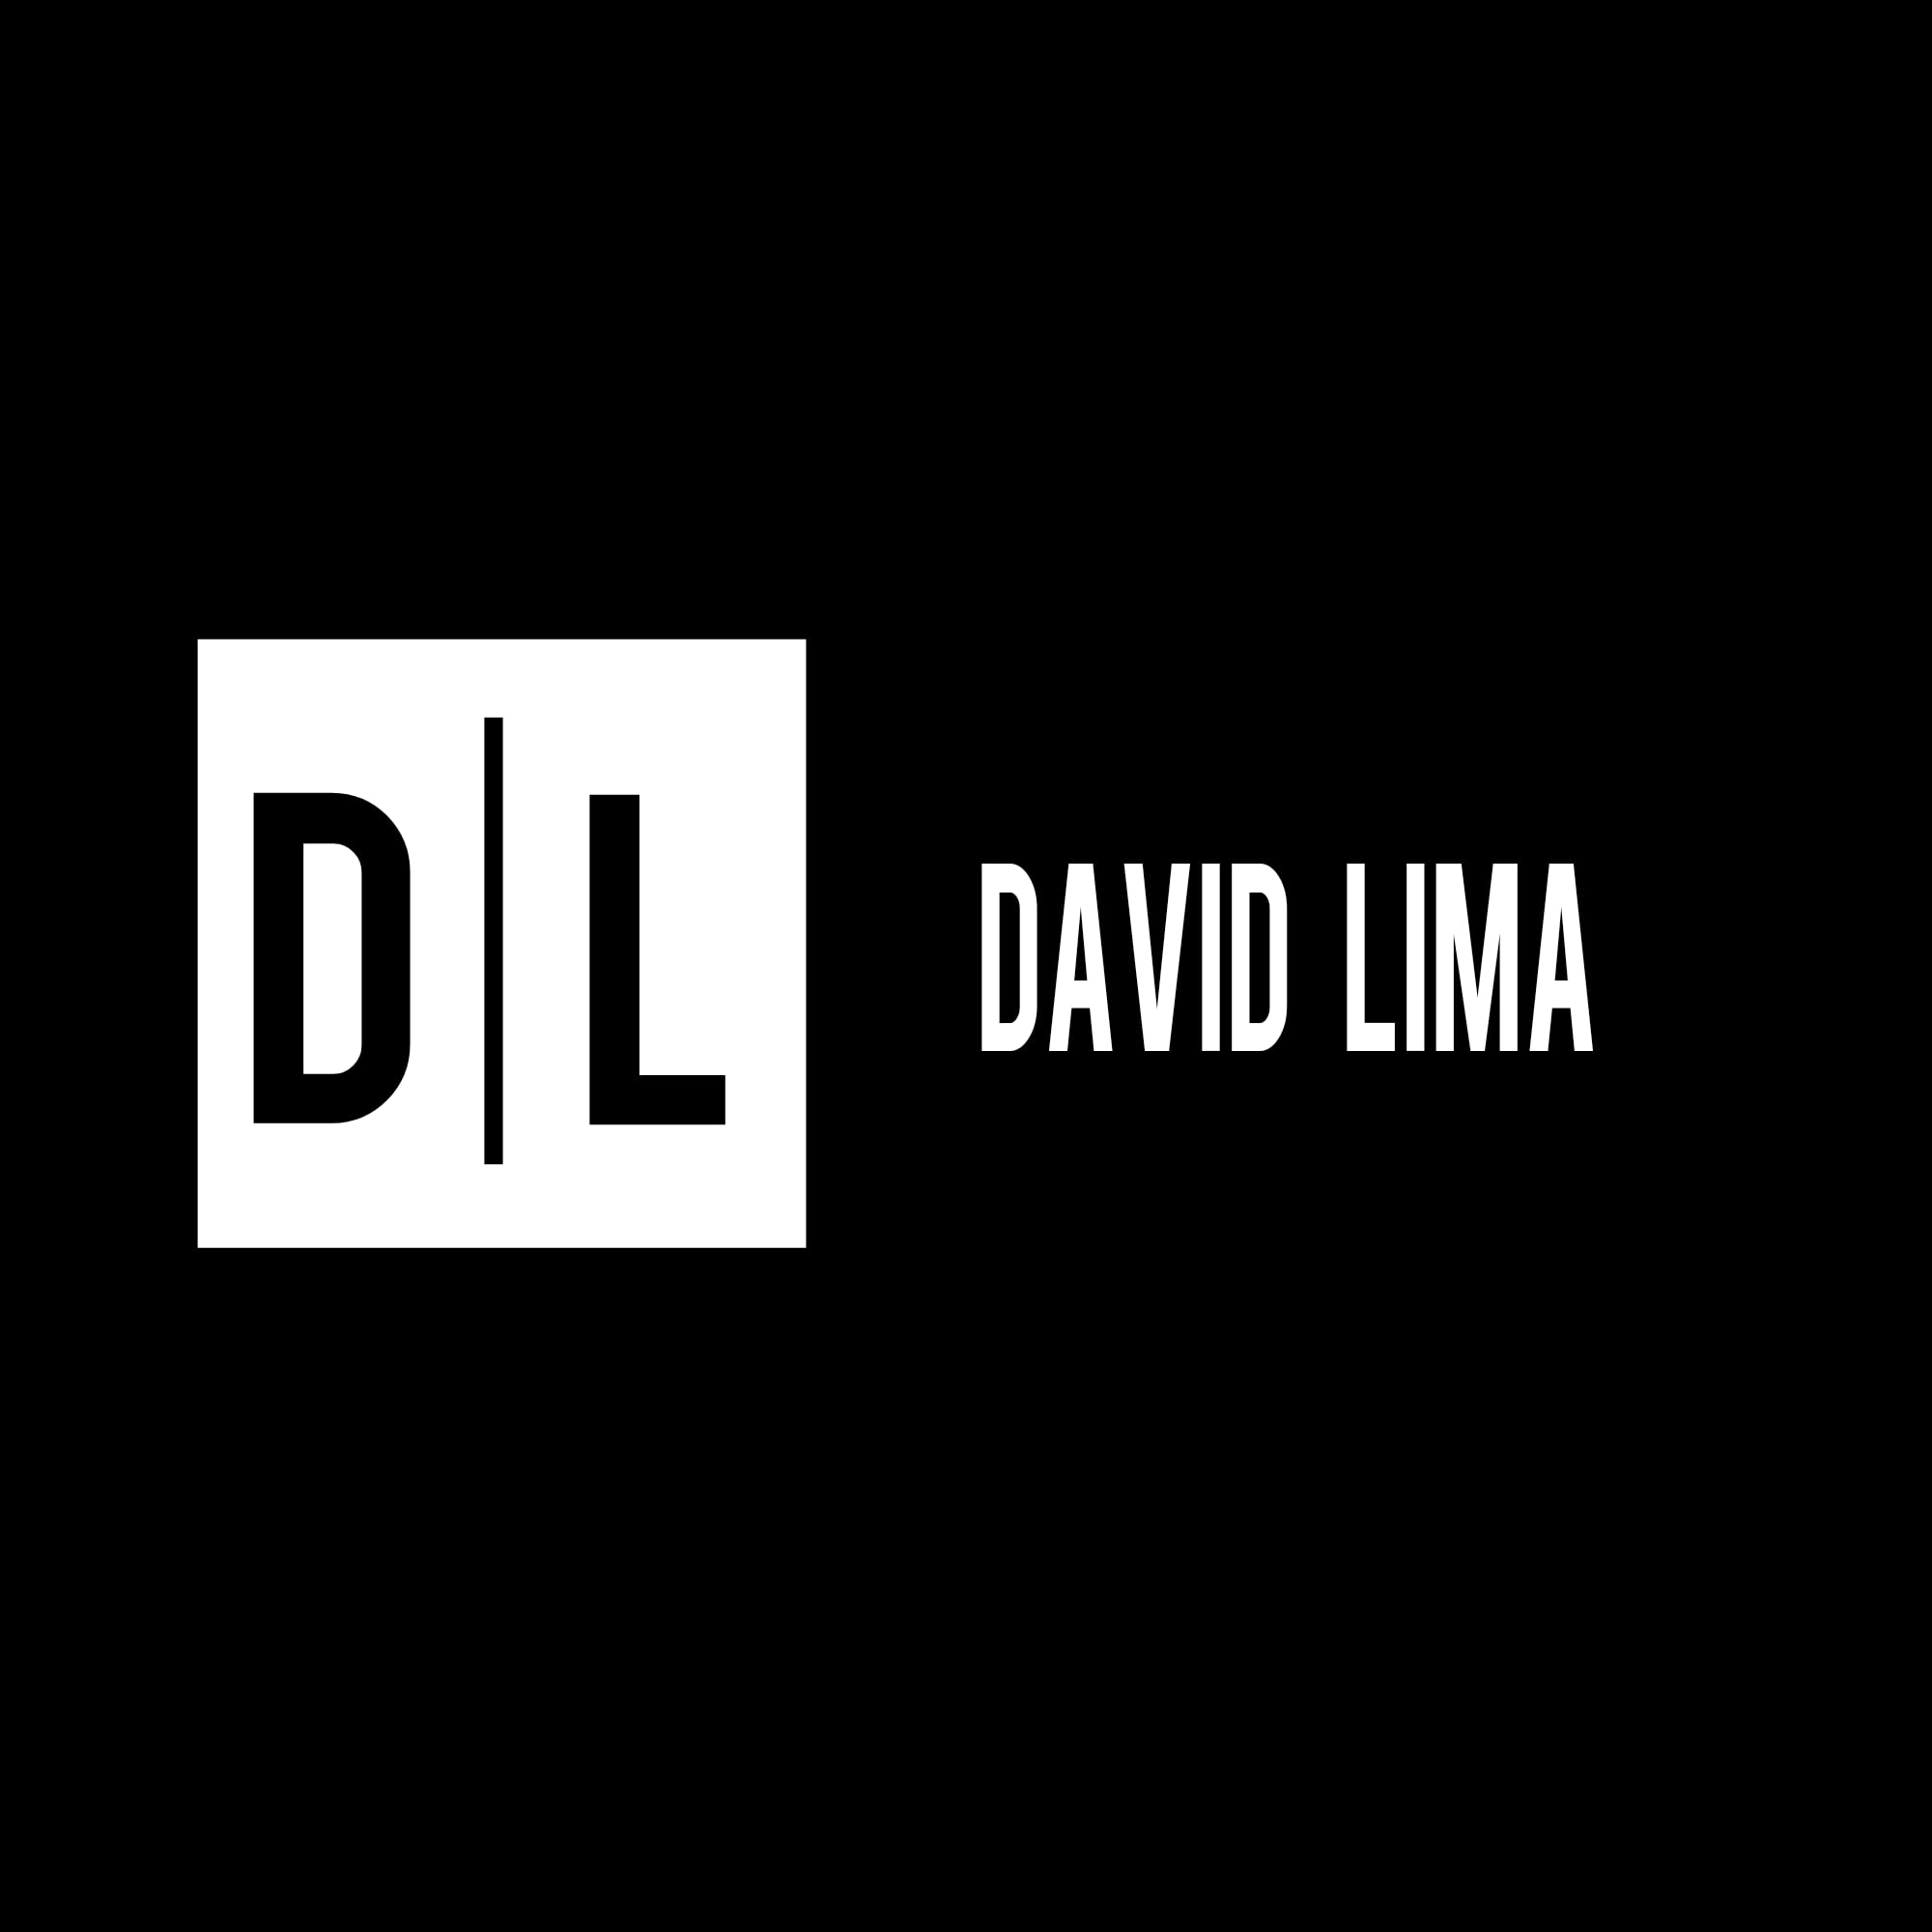 David Lima